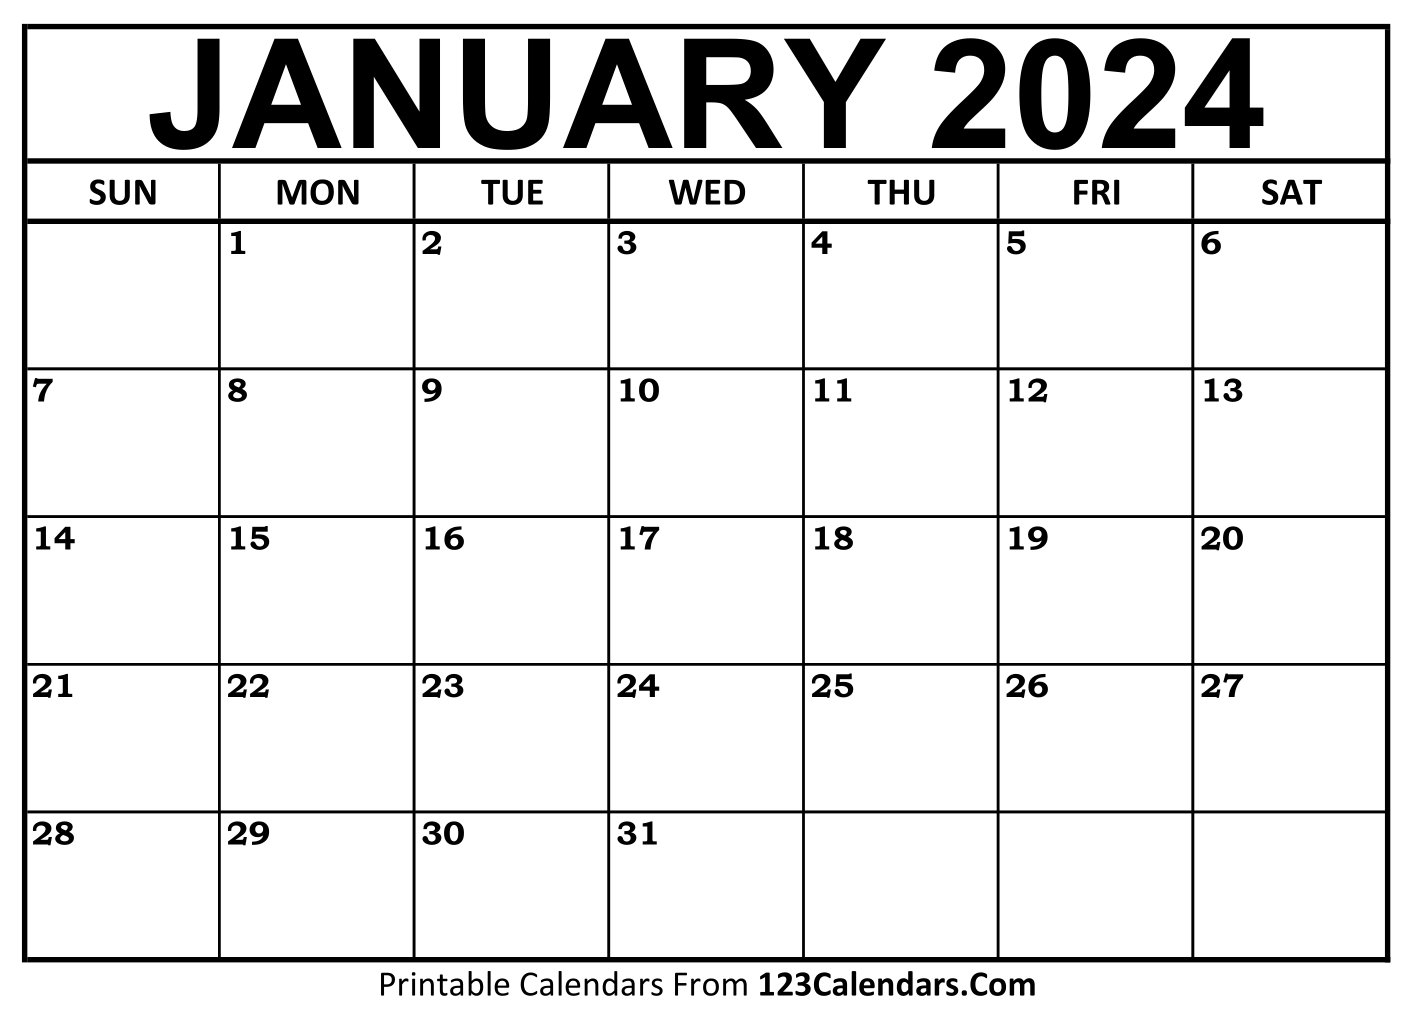 Printable January 2024 Calendar Templates - 123Calendars for Free Printable Jan 2024 Calendar